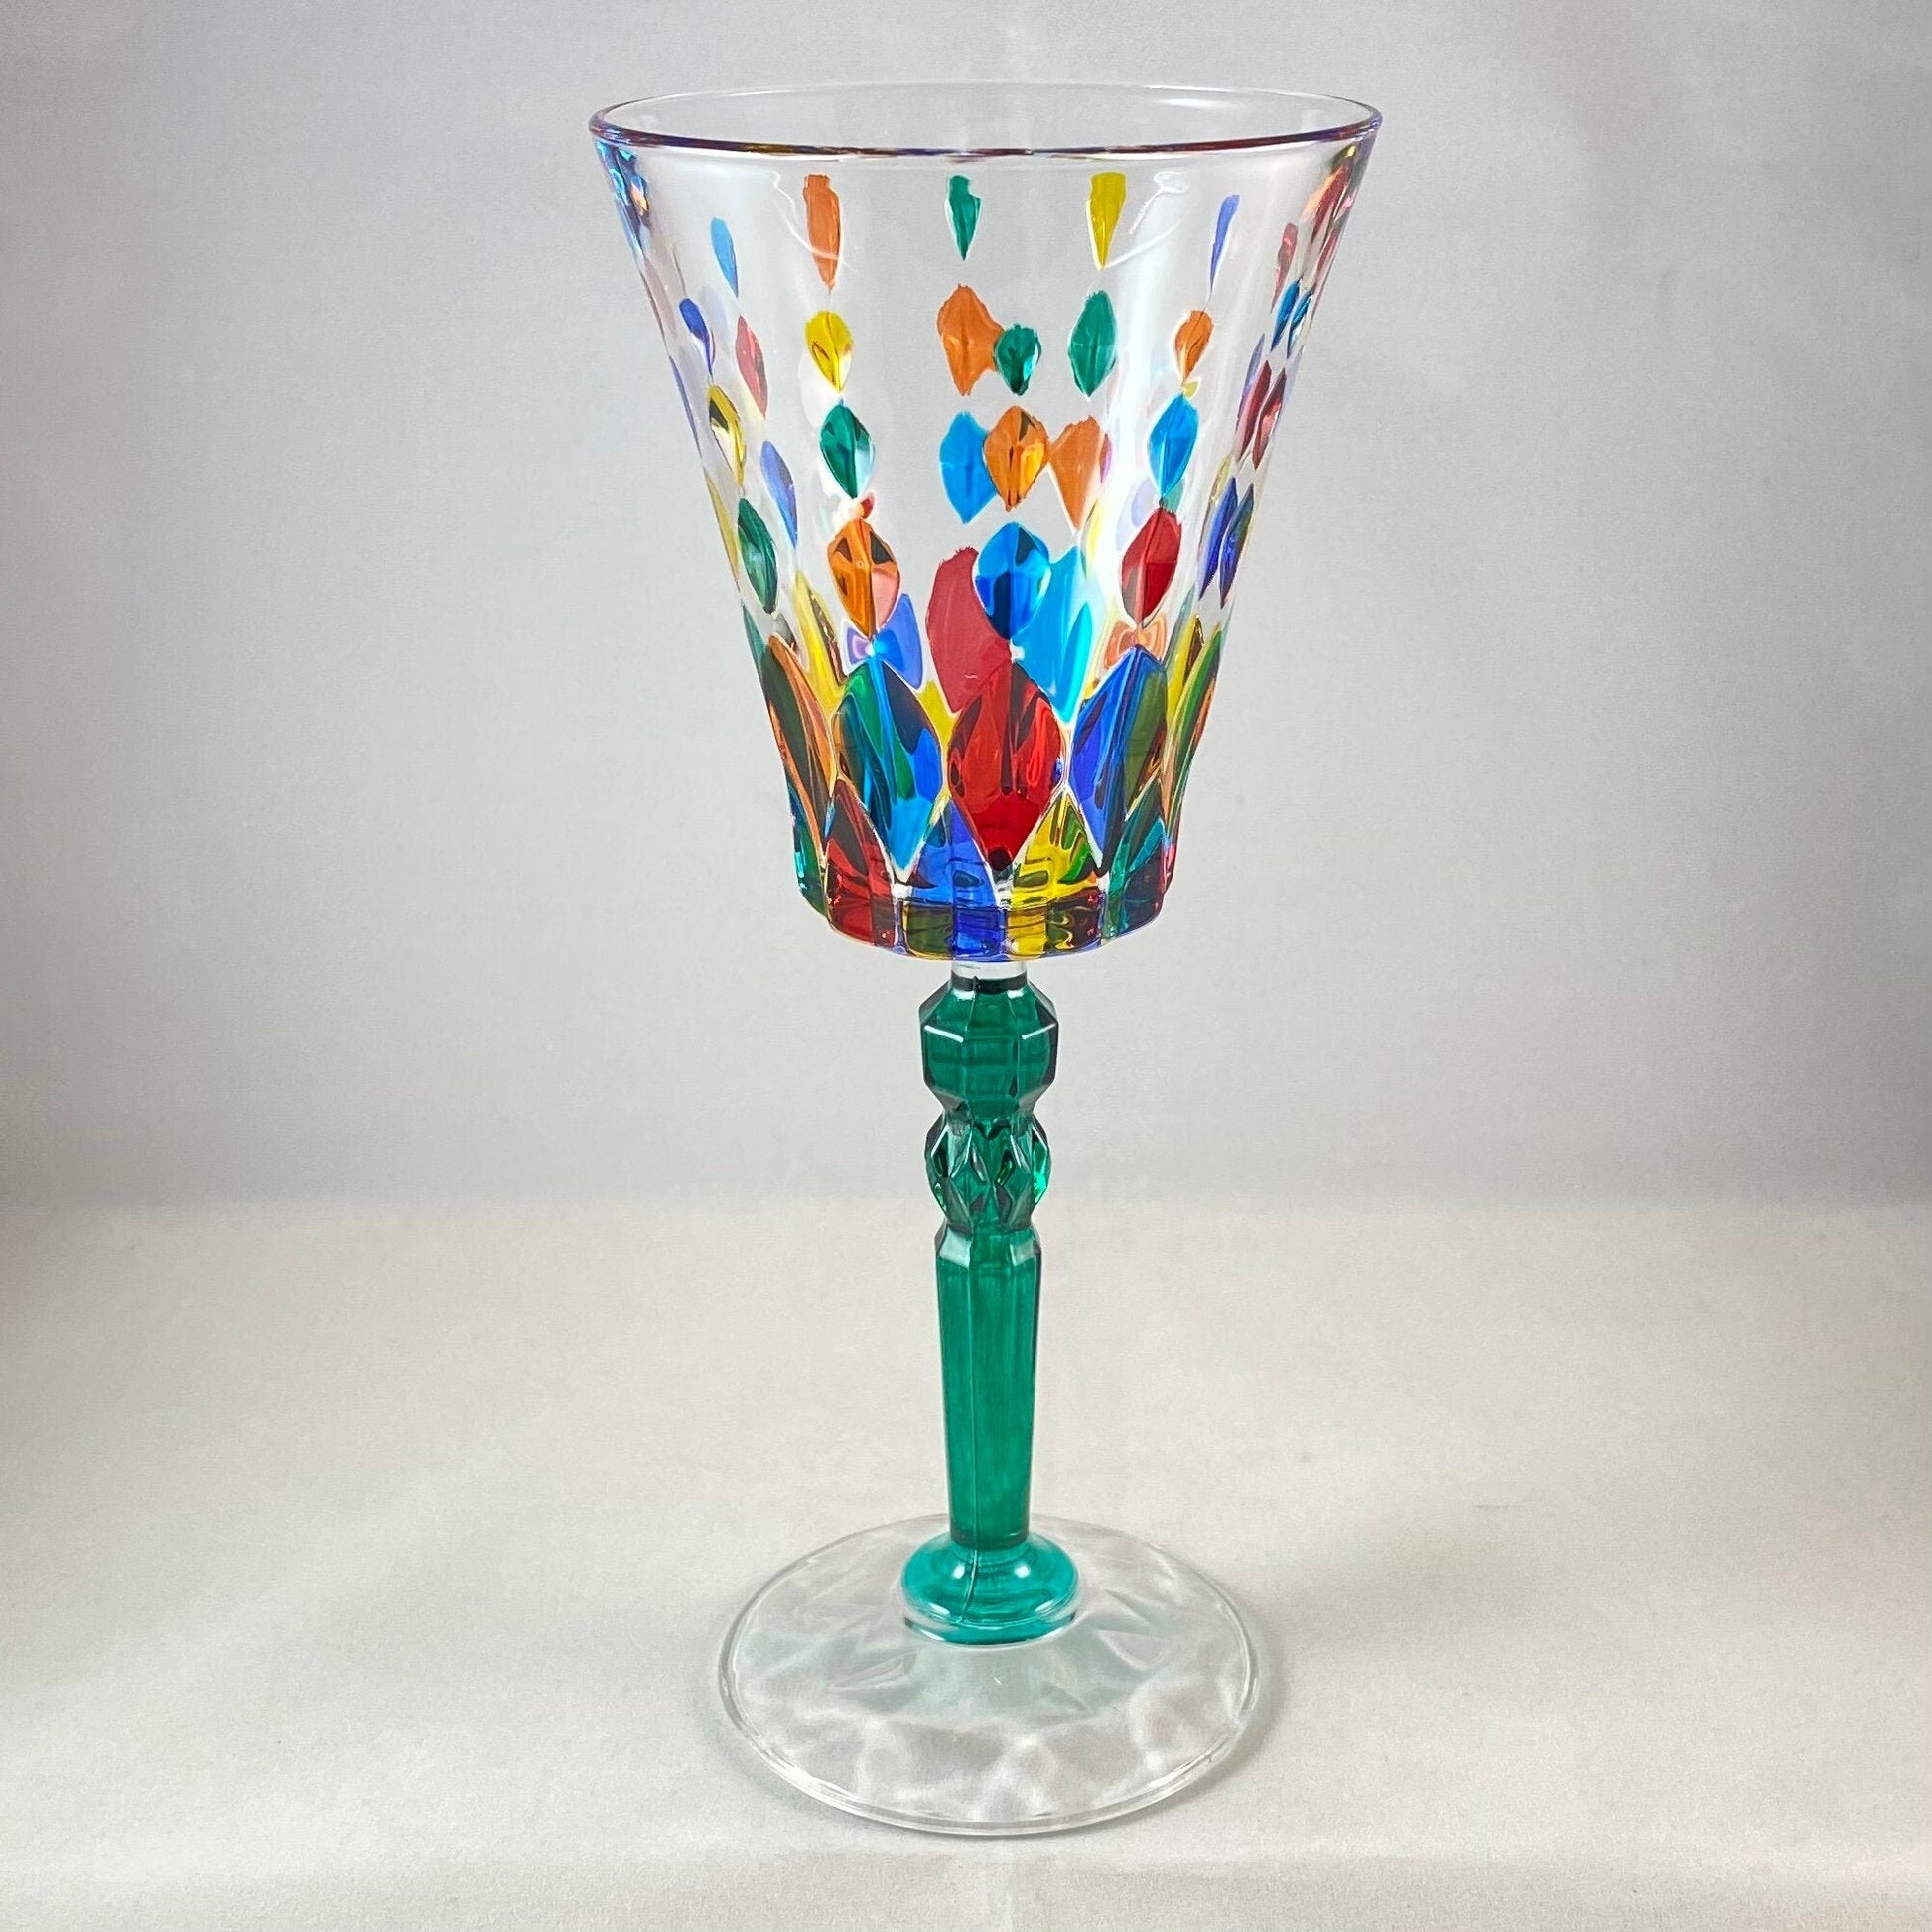 Green Stem Marilyn Venetian Glass Wine Glass - Handmade in Italy, Colorful Murano Glass